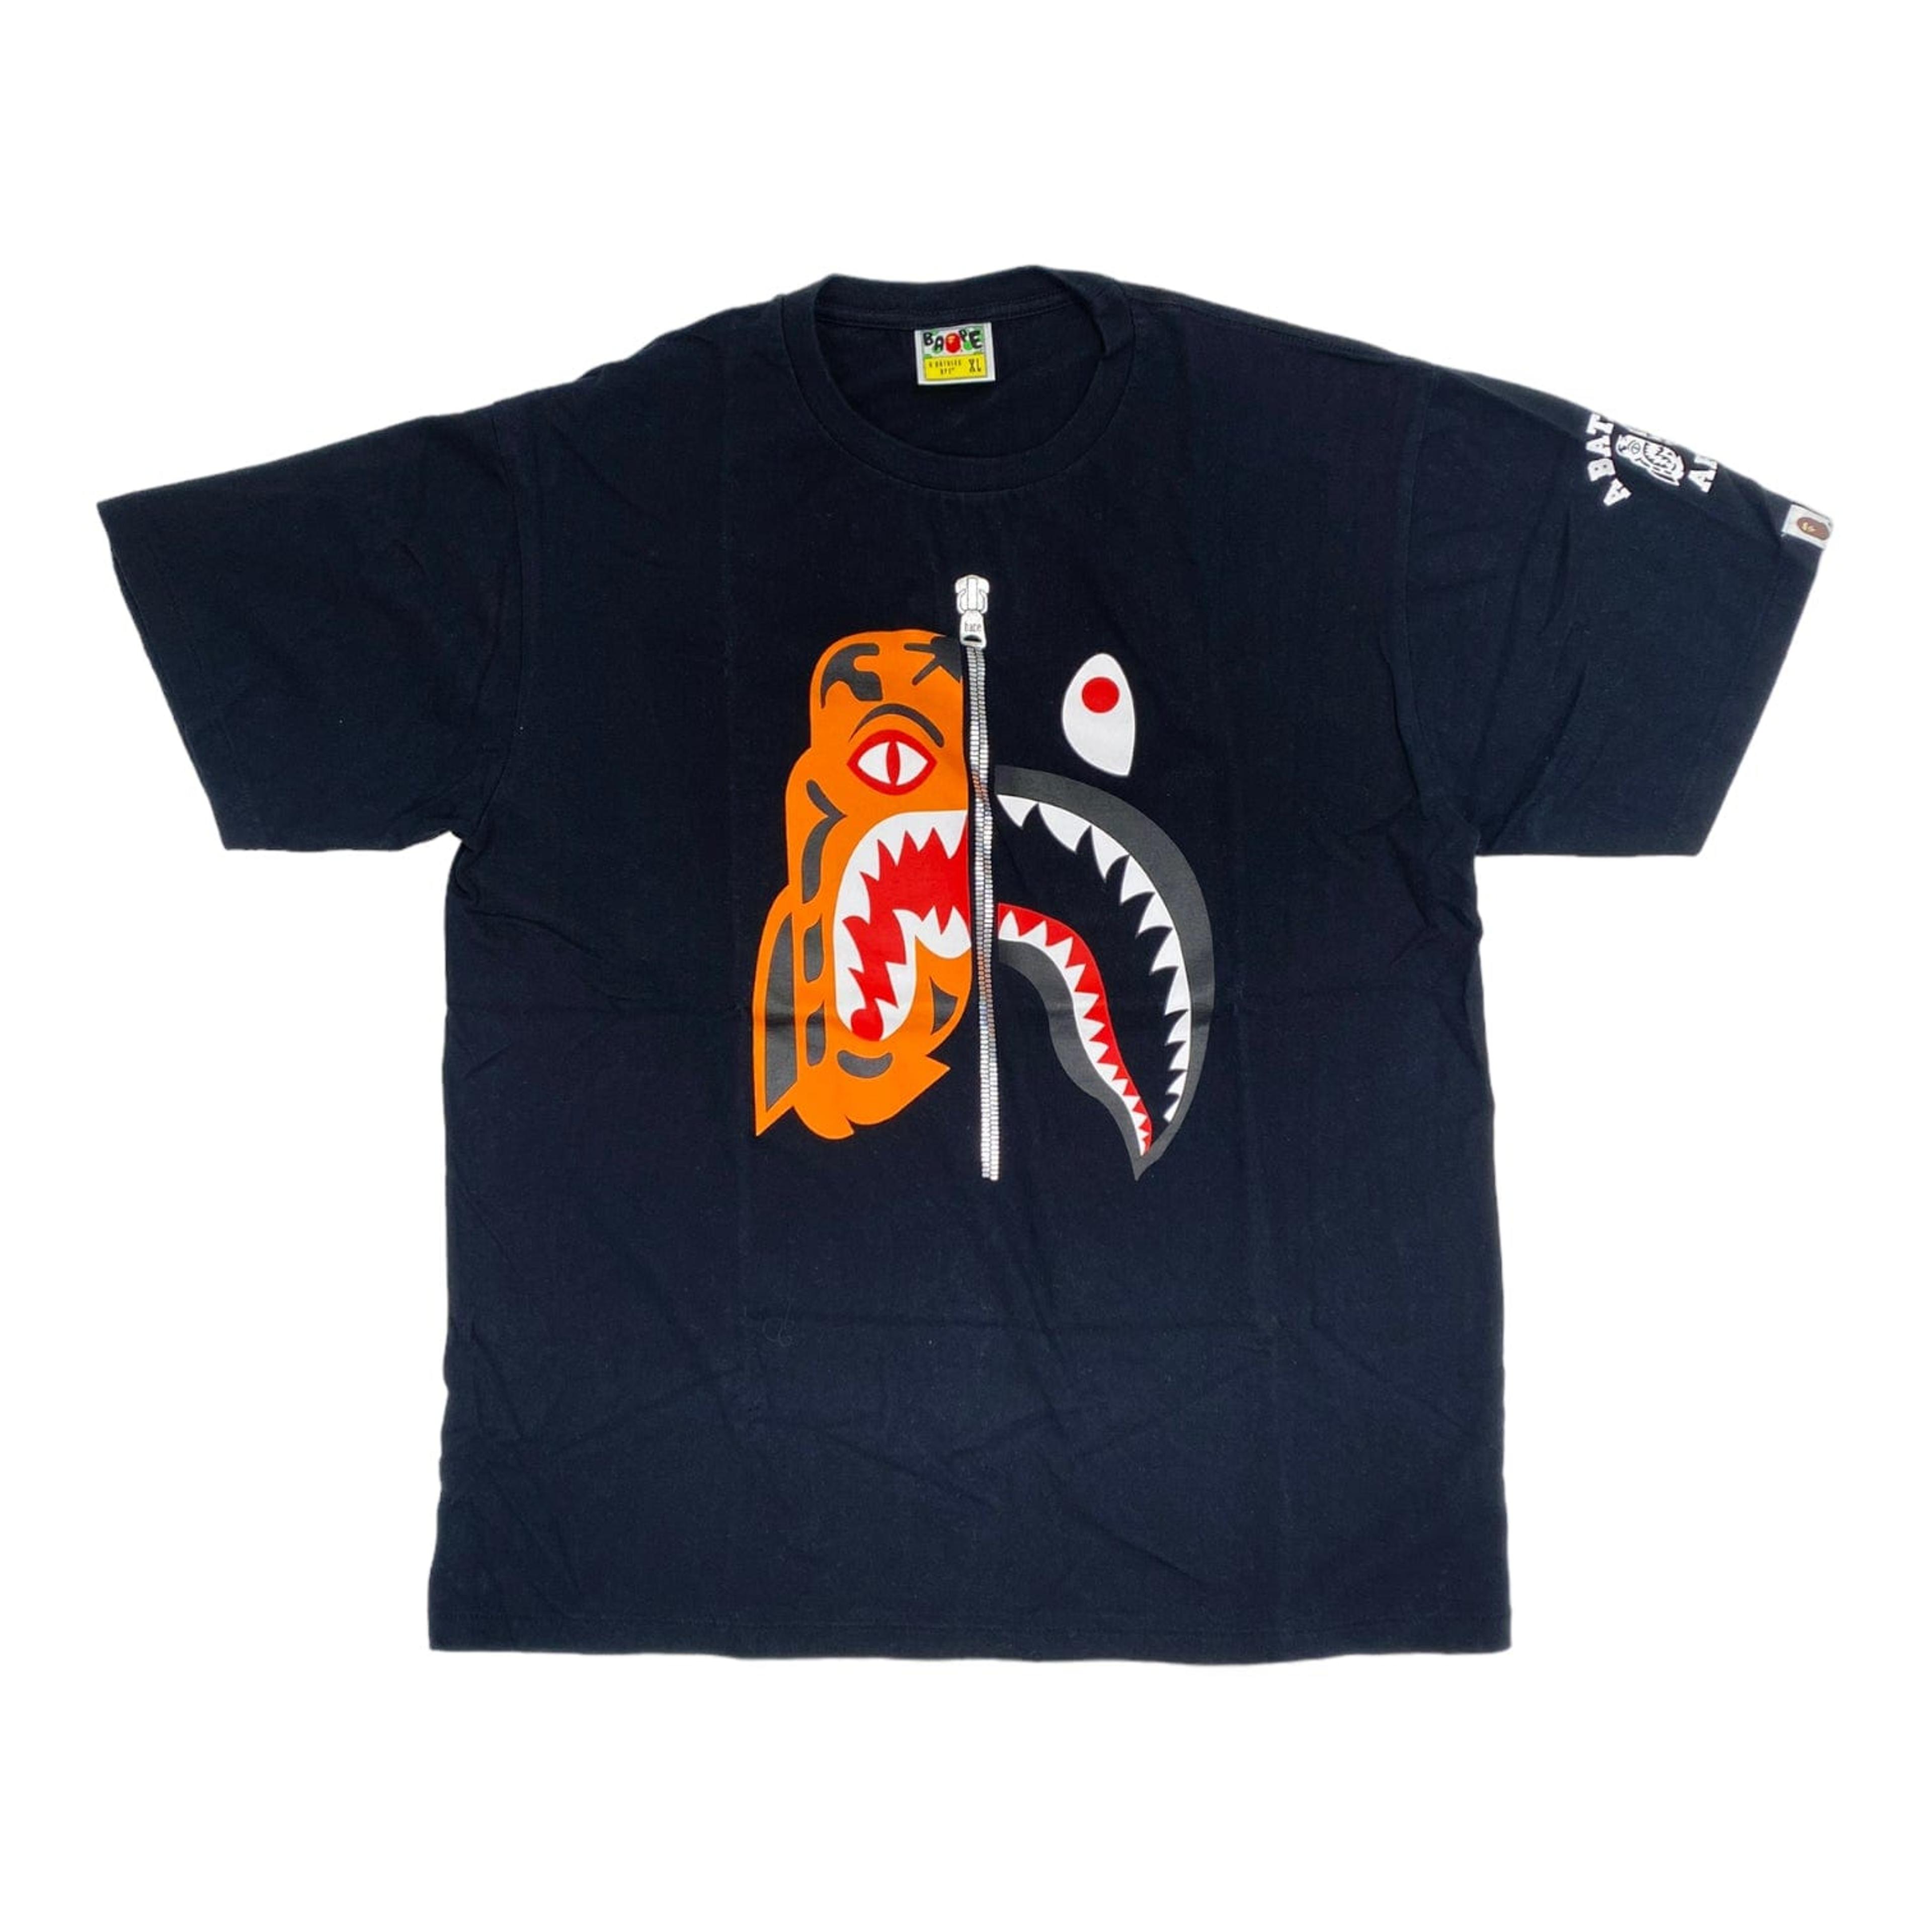 BAPE Tiger Shark Short Sleeve Tee Shirt Black